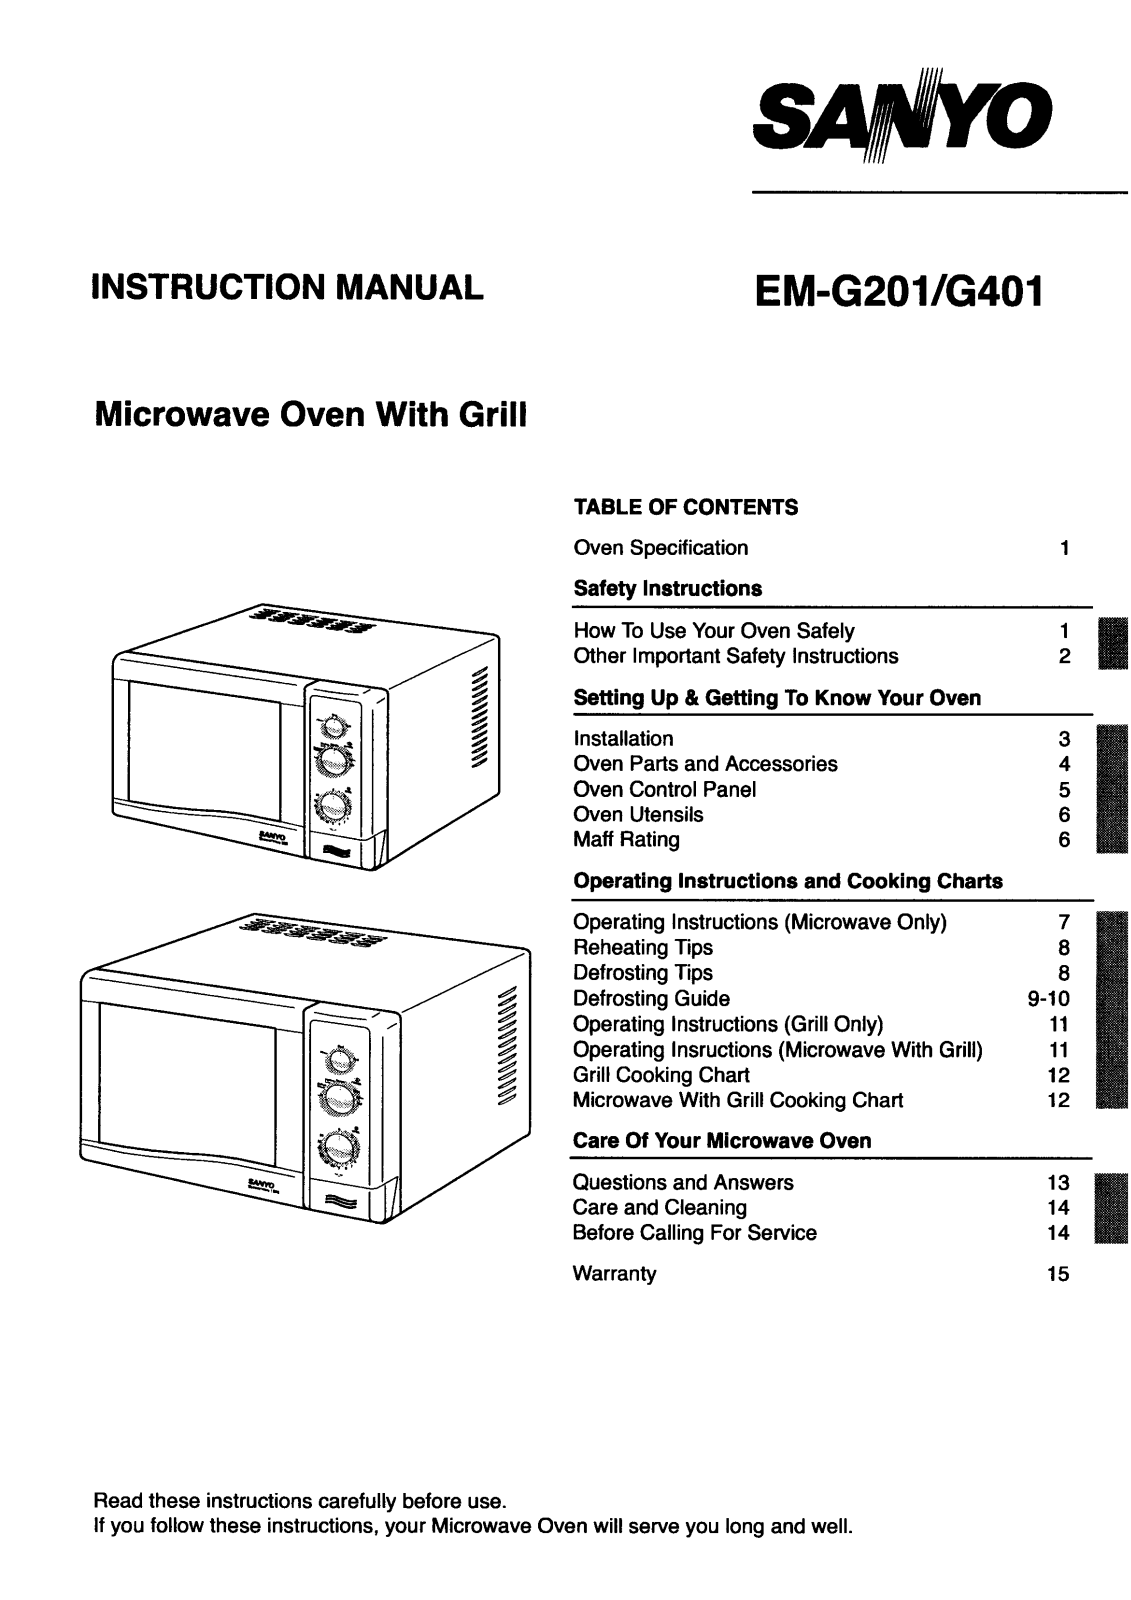 Sanyo EM-G201, EM-G401 Instruction Manual